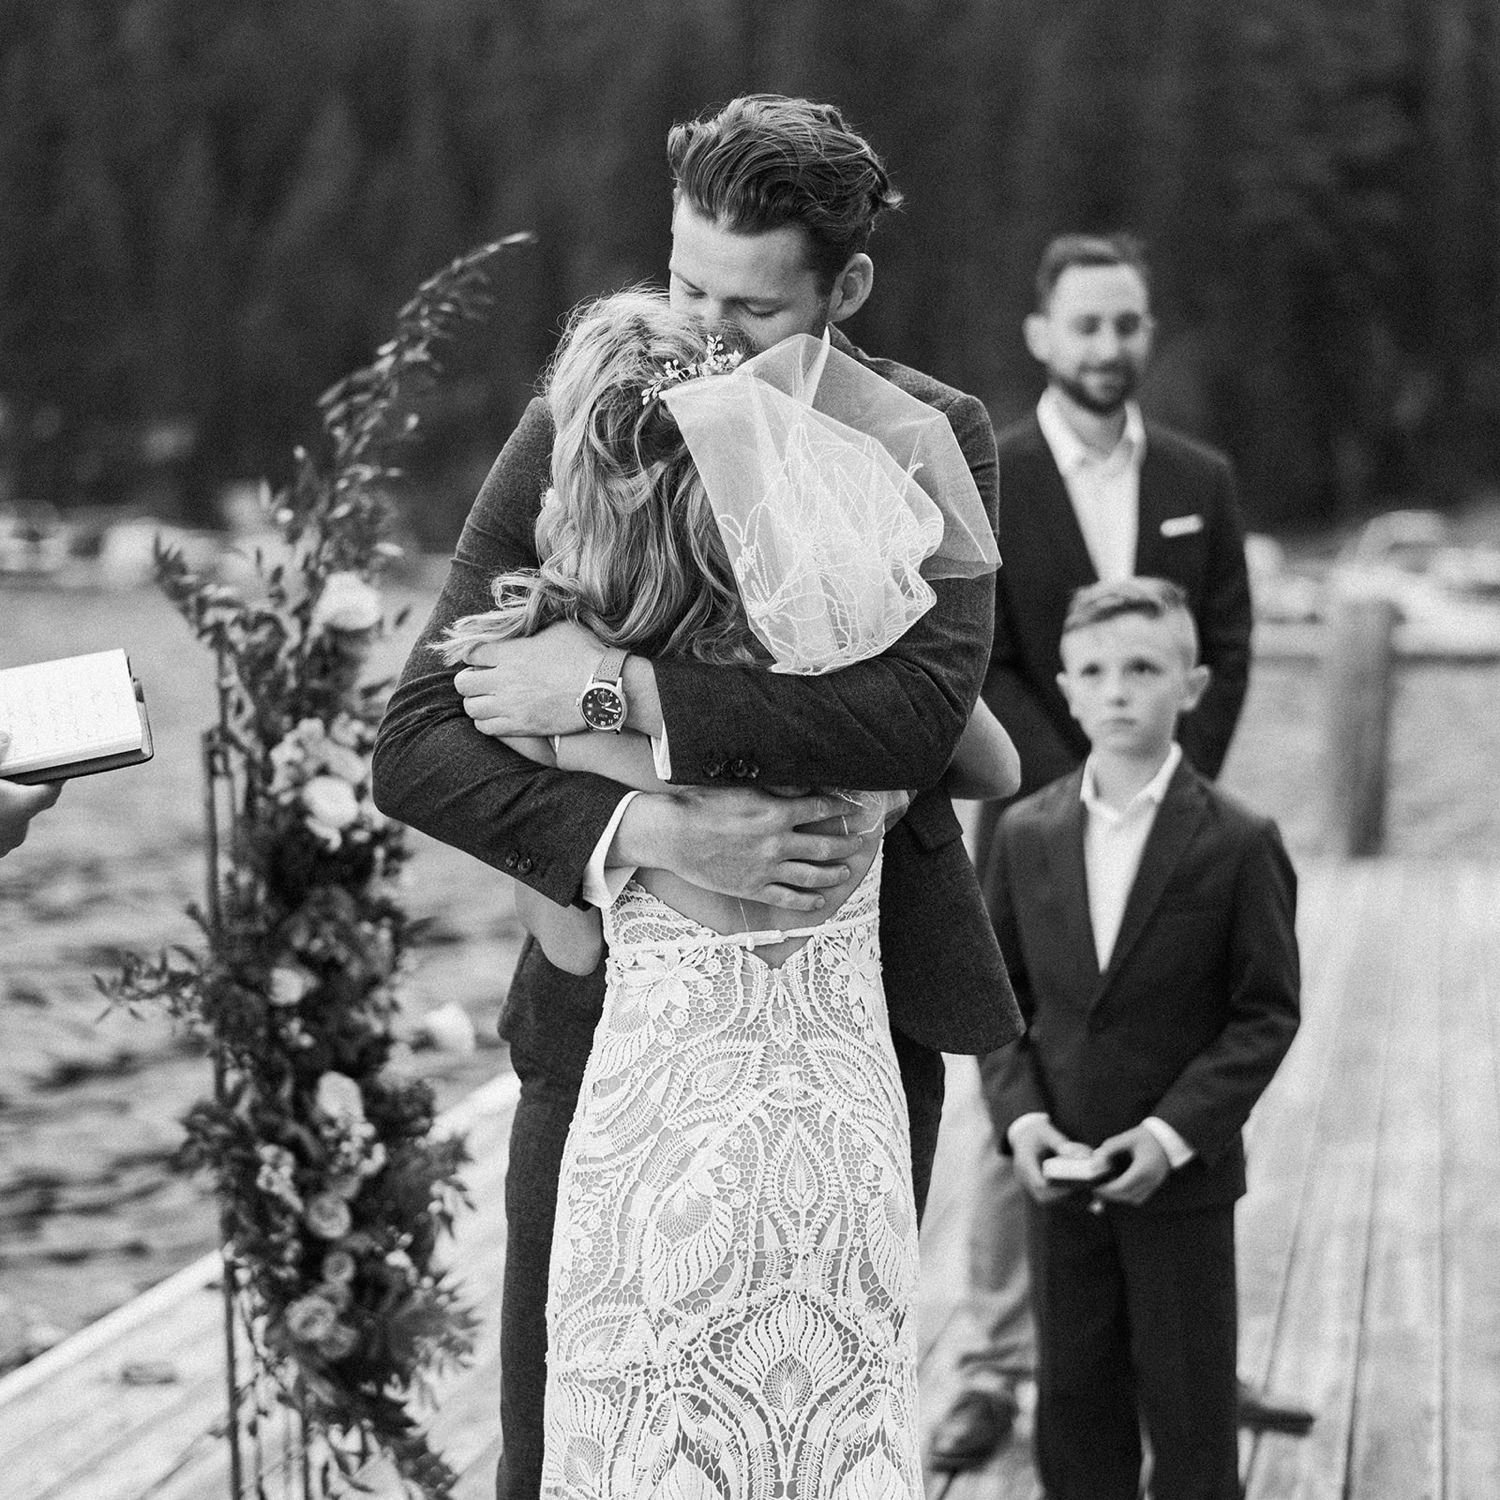 0047-096_Priest Lake wedding at Cavanaugh’s Resort by best Idaho wedding photographer.JPG